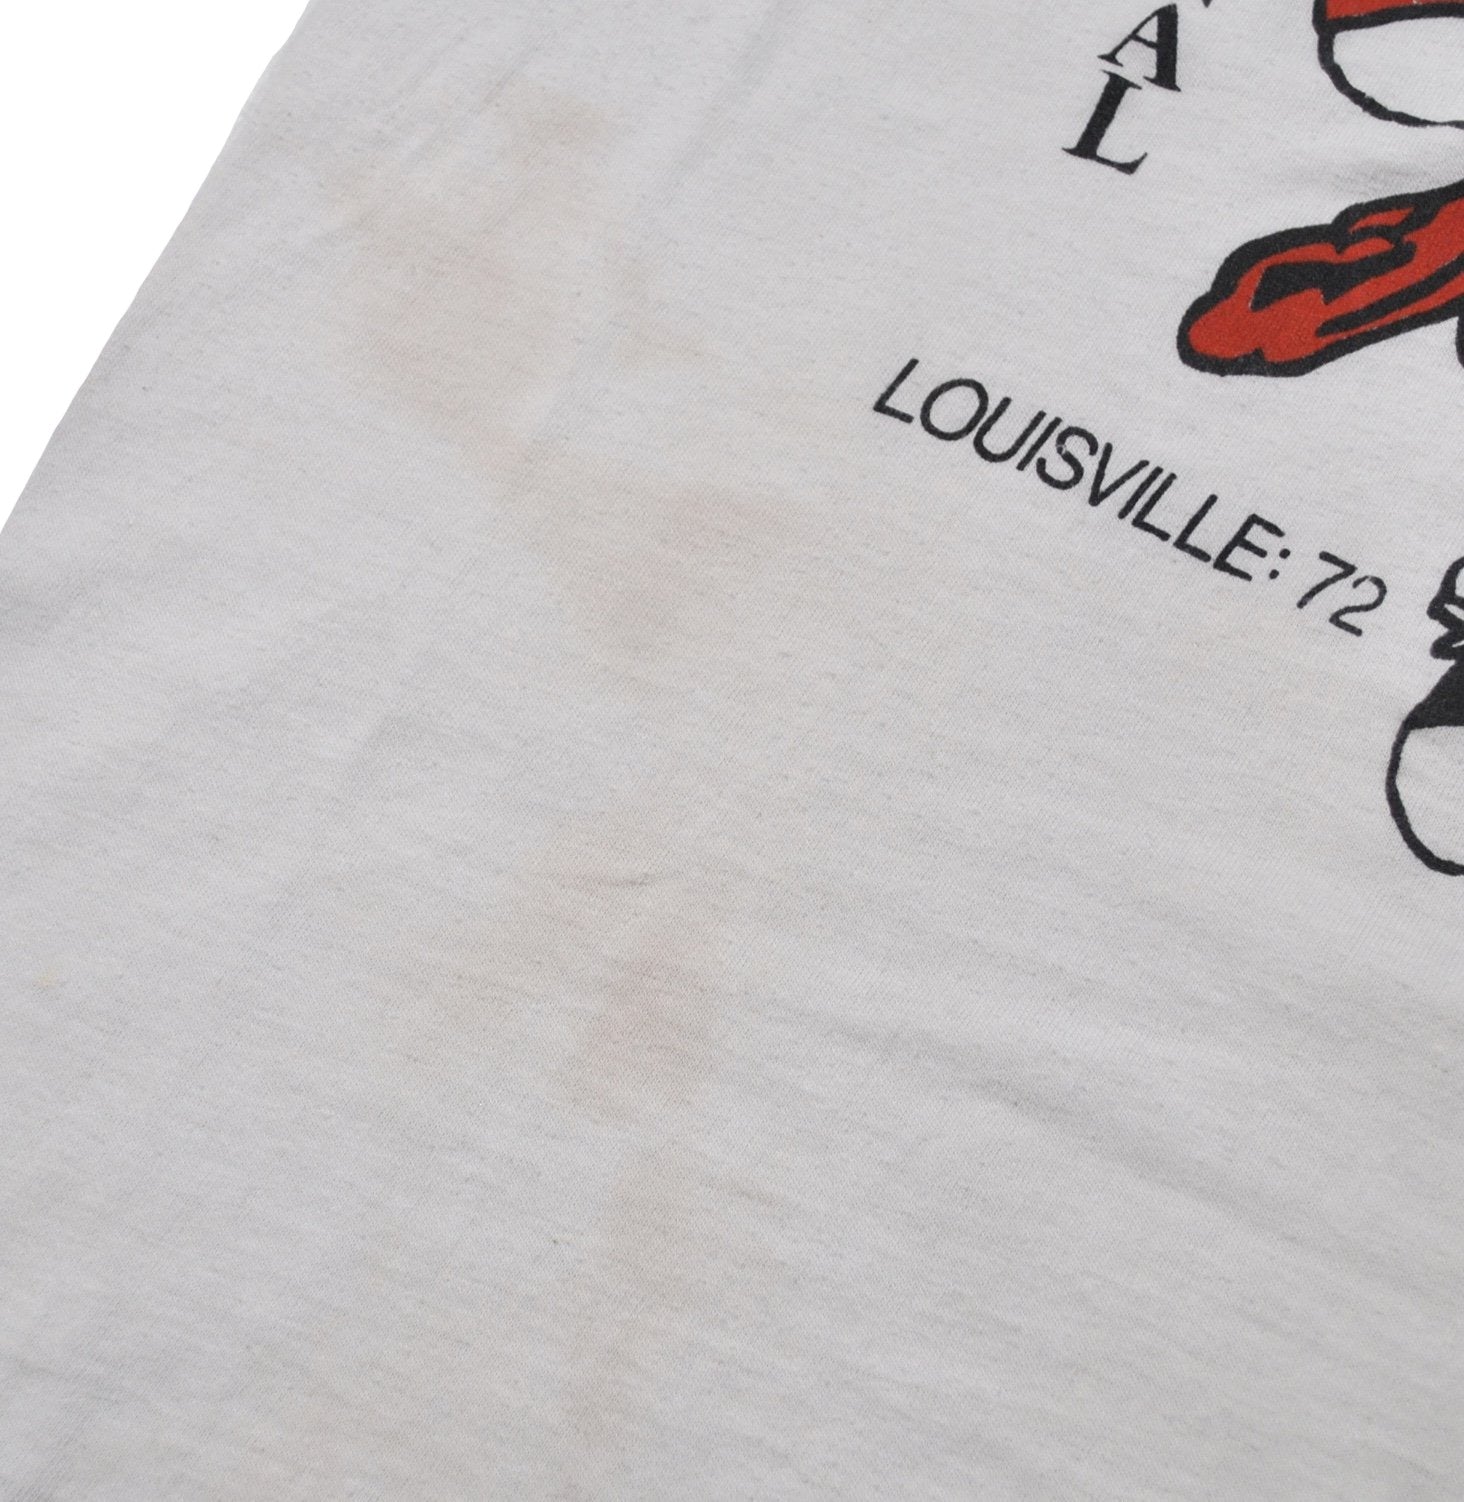 Vintage Louisville Cardinals 1986 National Champions Shirt Size